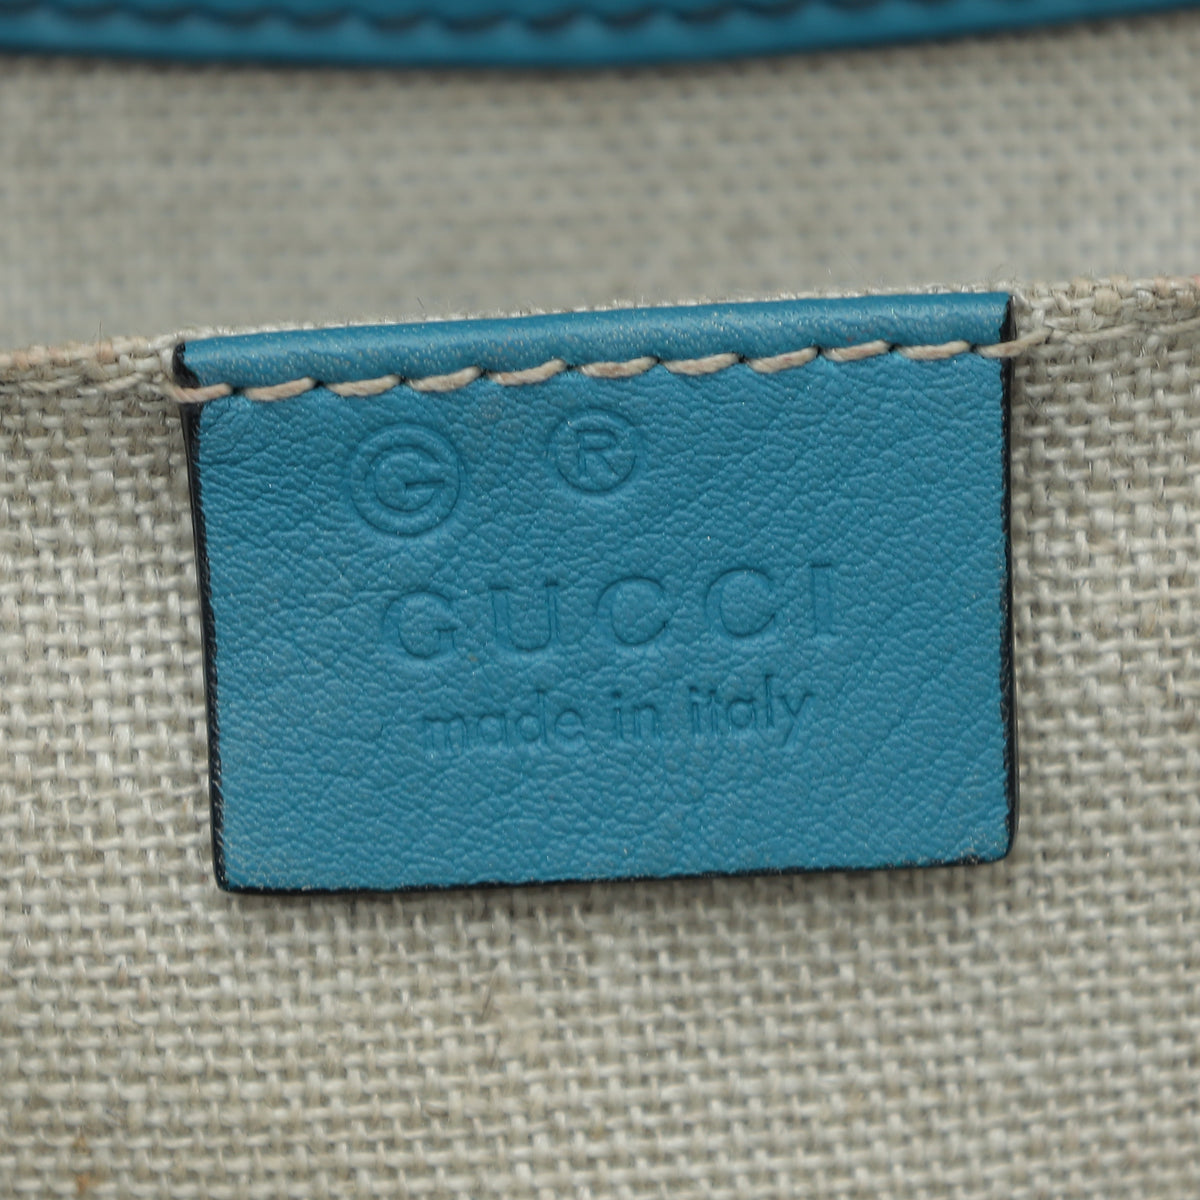 Gucci Tuquoise Microguccissima Emily Medium Bag